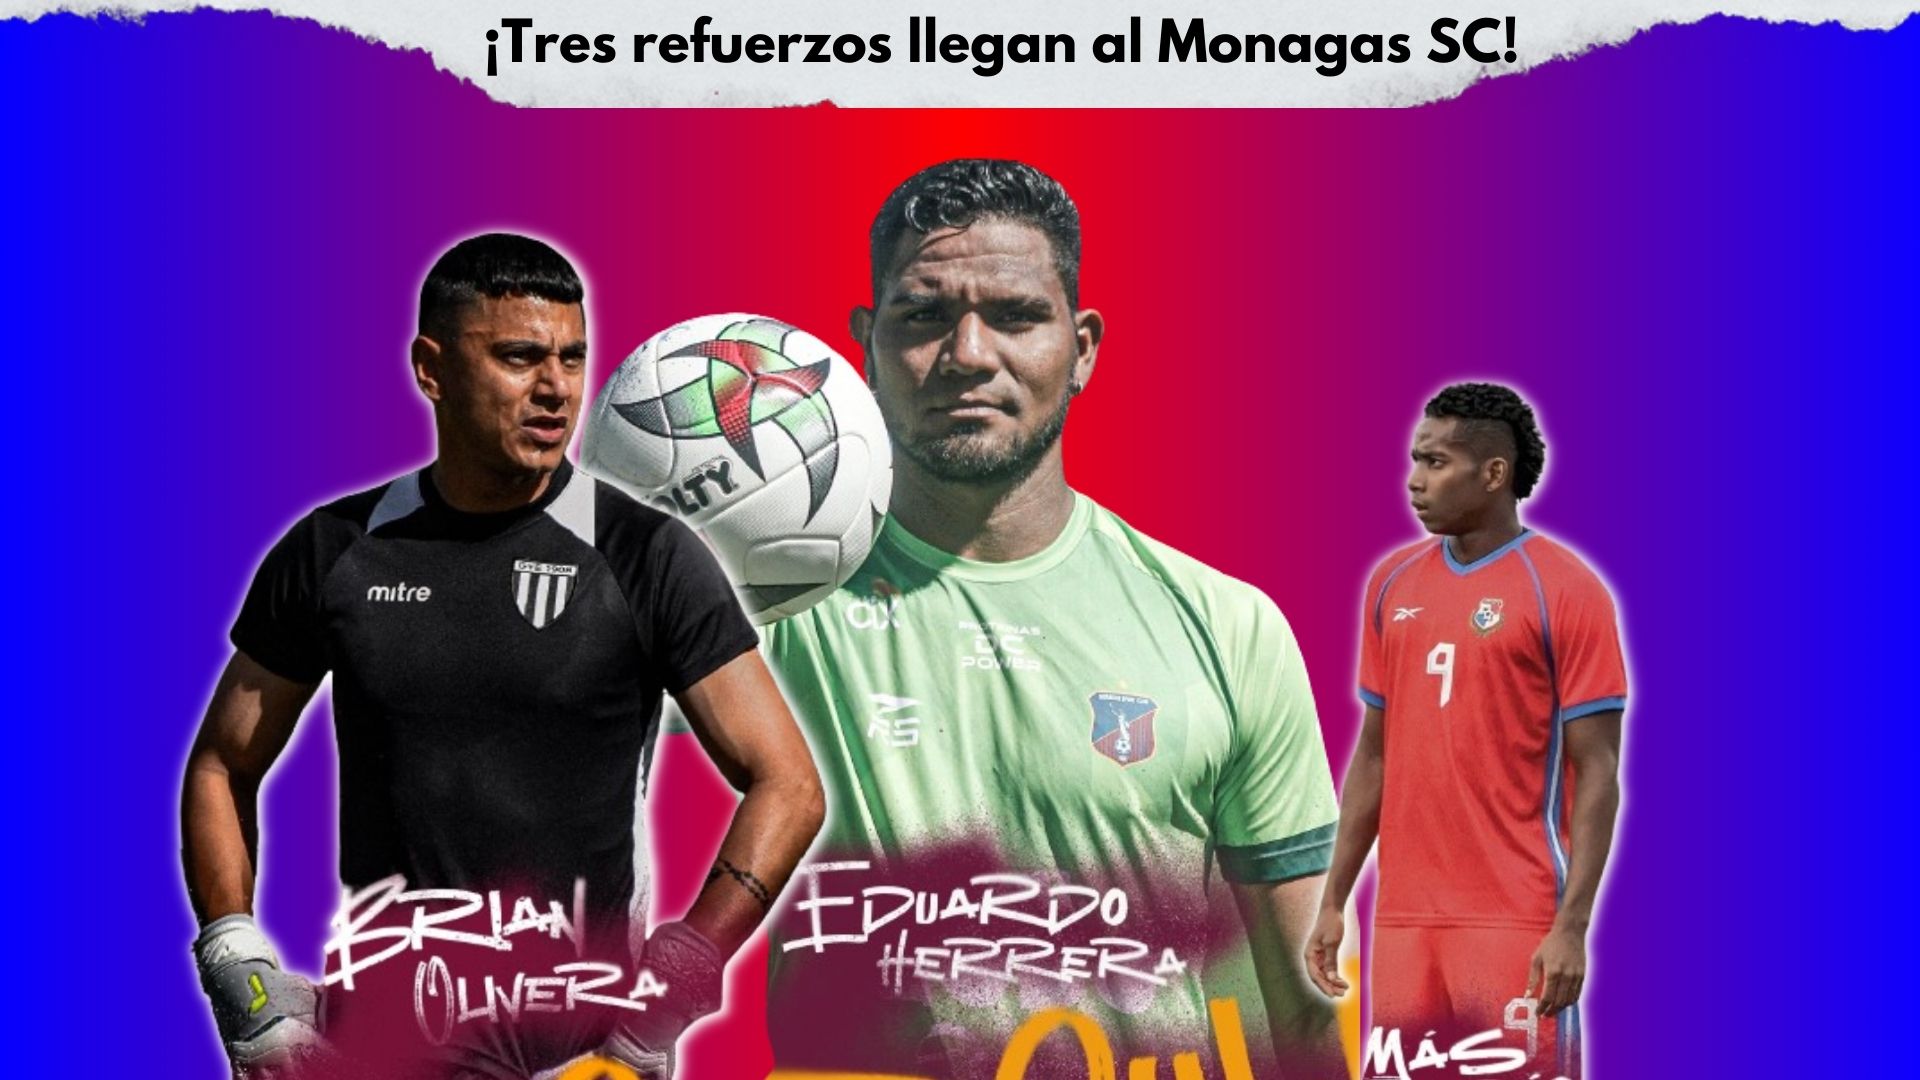 ¡Tres refuerzos llegan al Monagas SC!.jpg